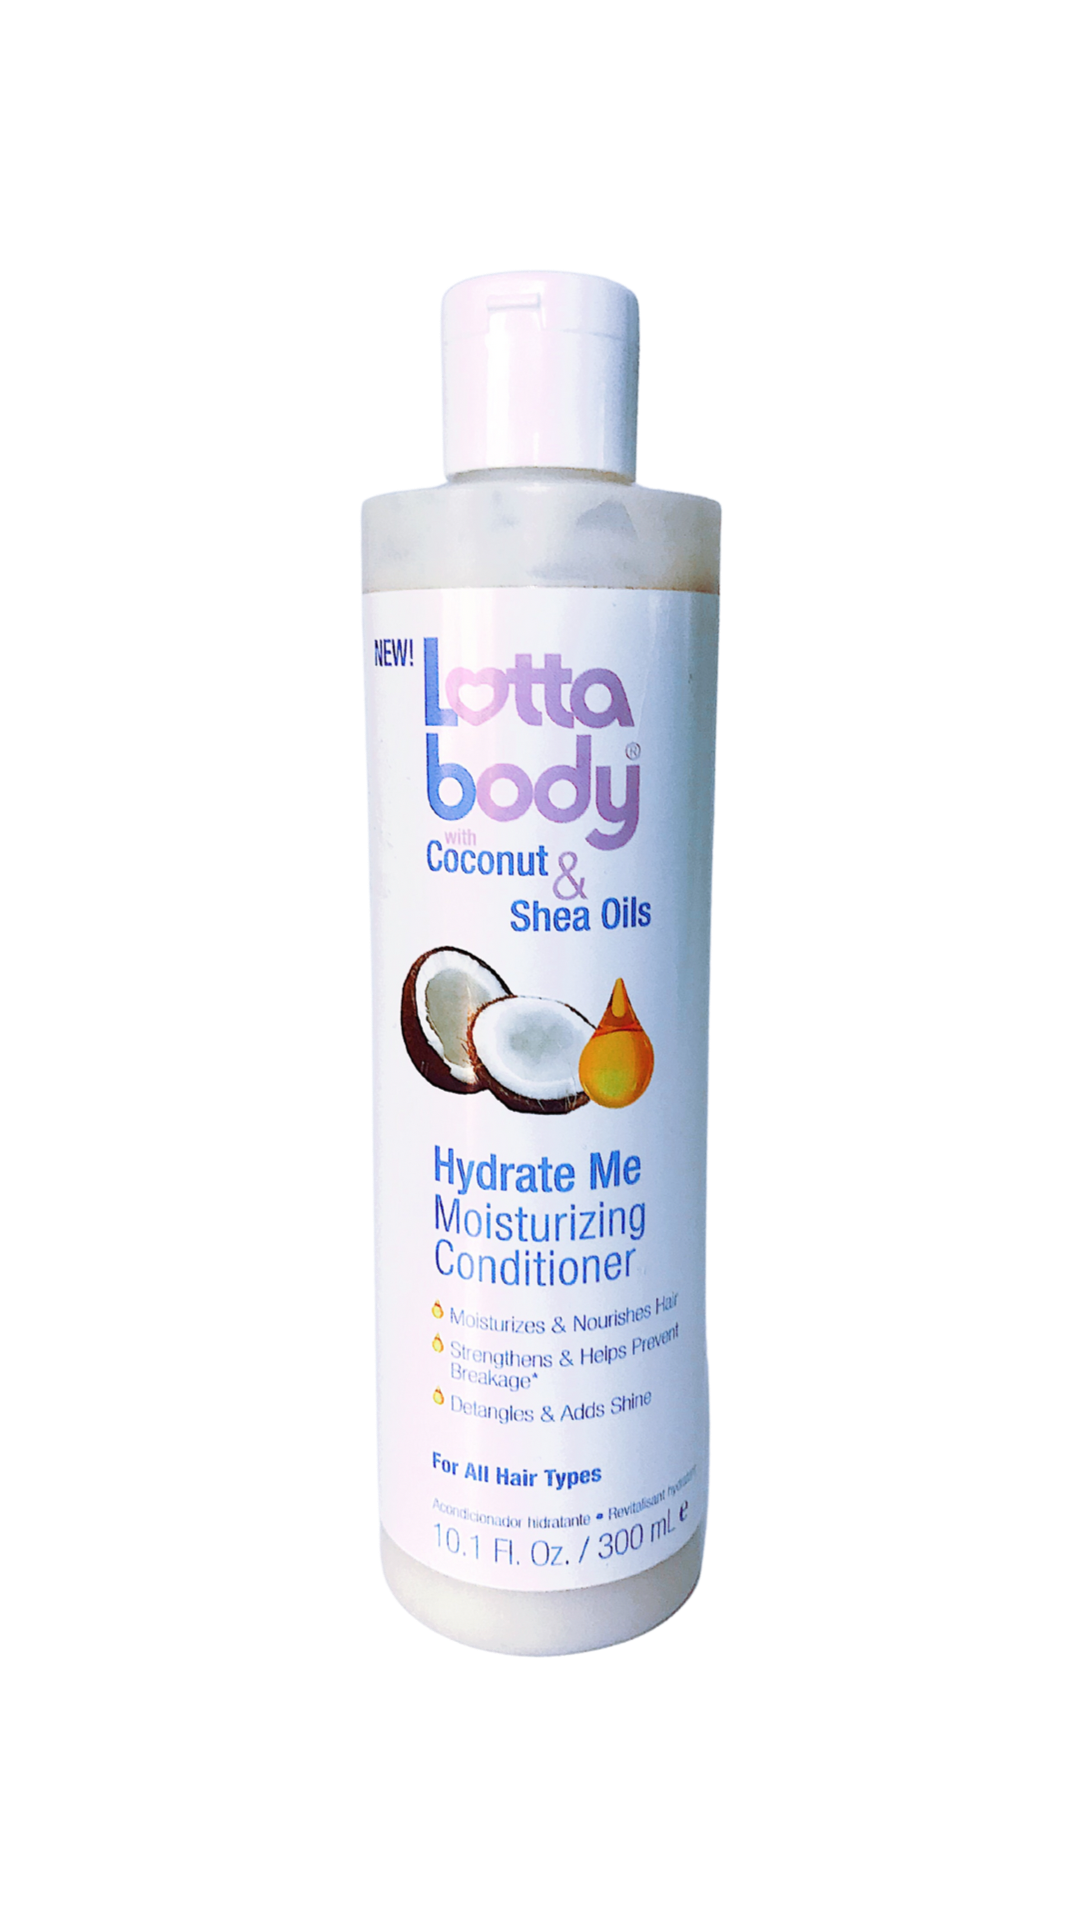 Lotta-Body-Coconut-&-Shea-Oils-Hydrate-Me-Moisturizing-Conditioner.jpg